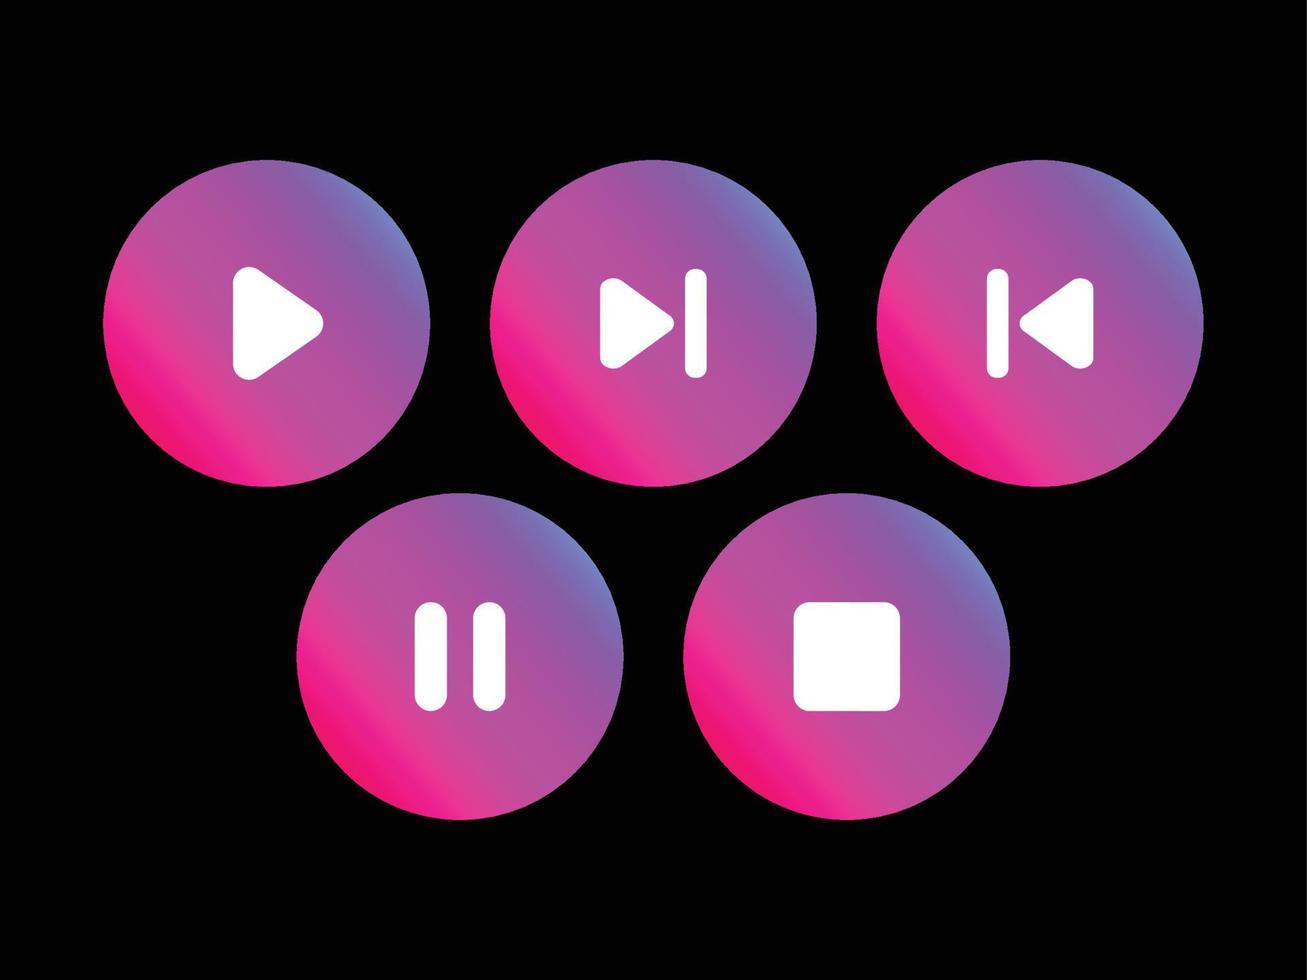 Media player icon, media player button, gradation icon set vector